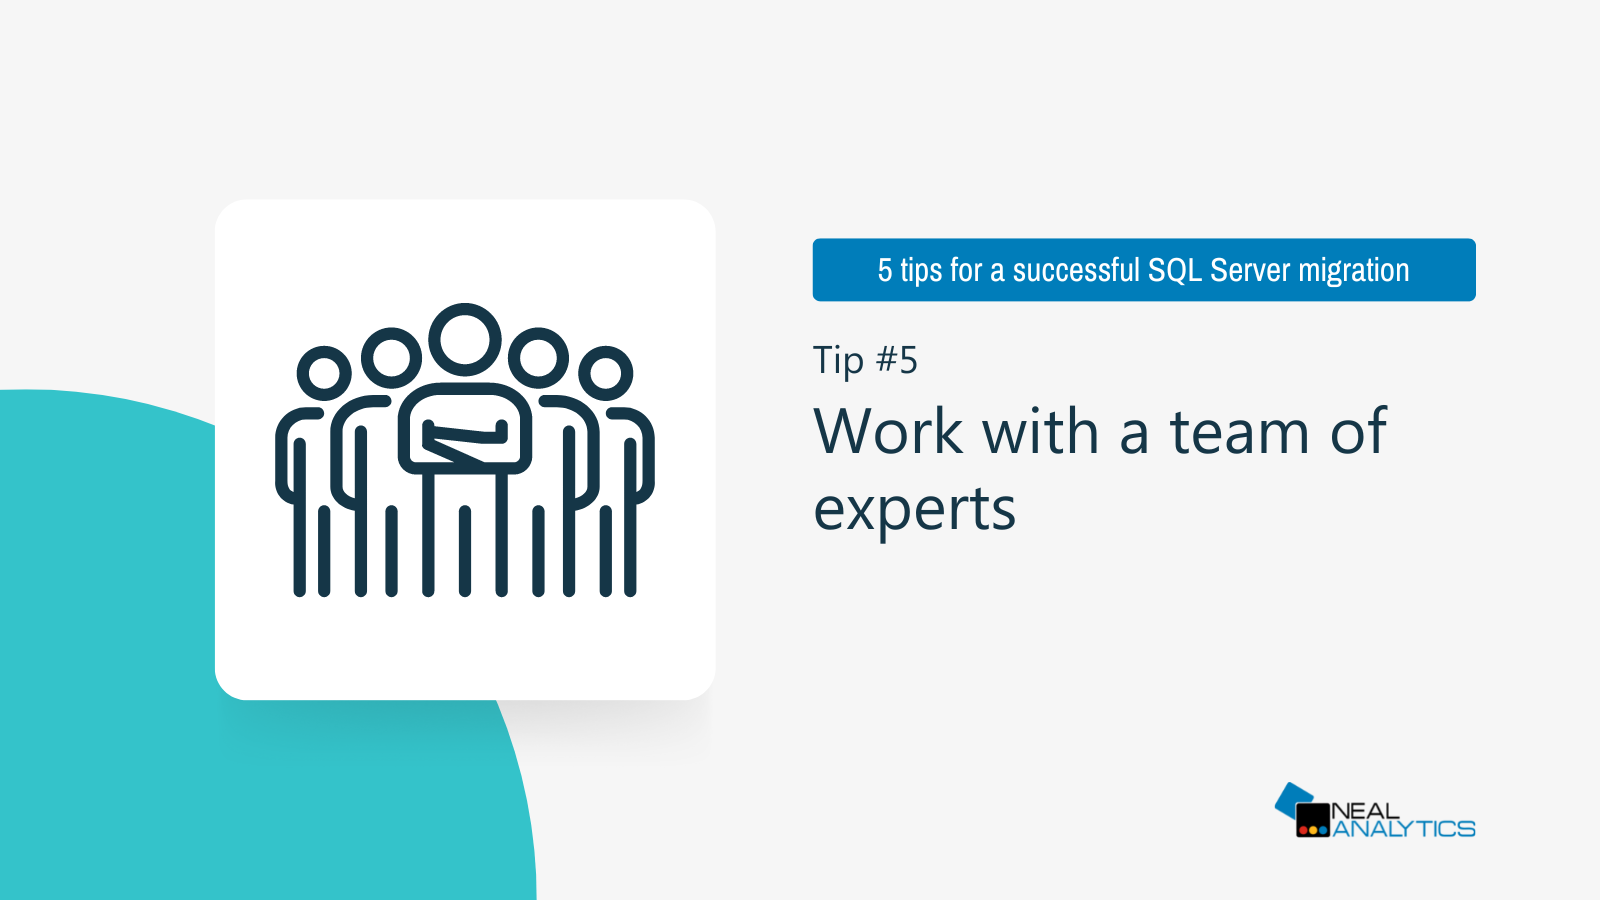 SQL Server migration tip 5: Work with a team of experts